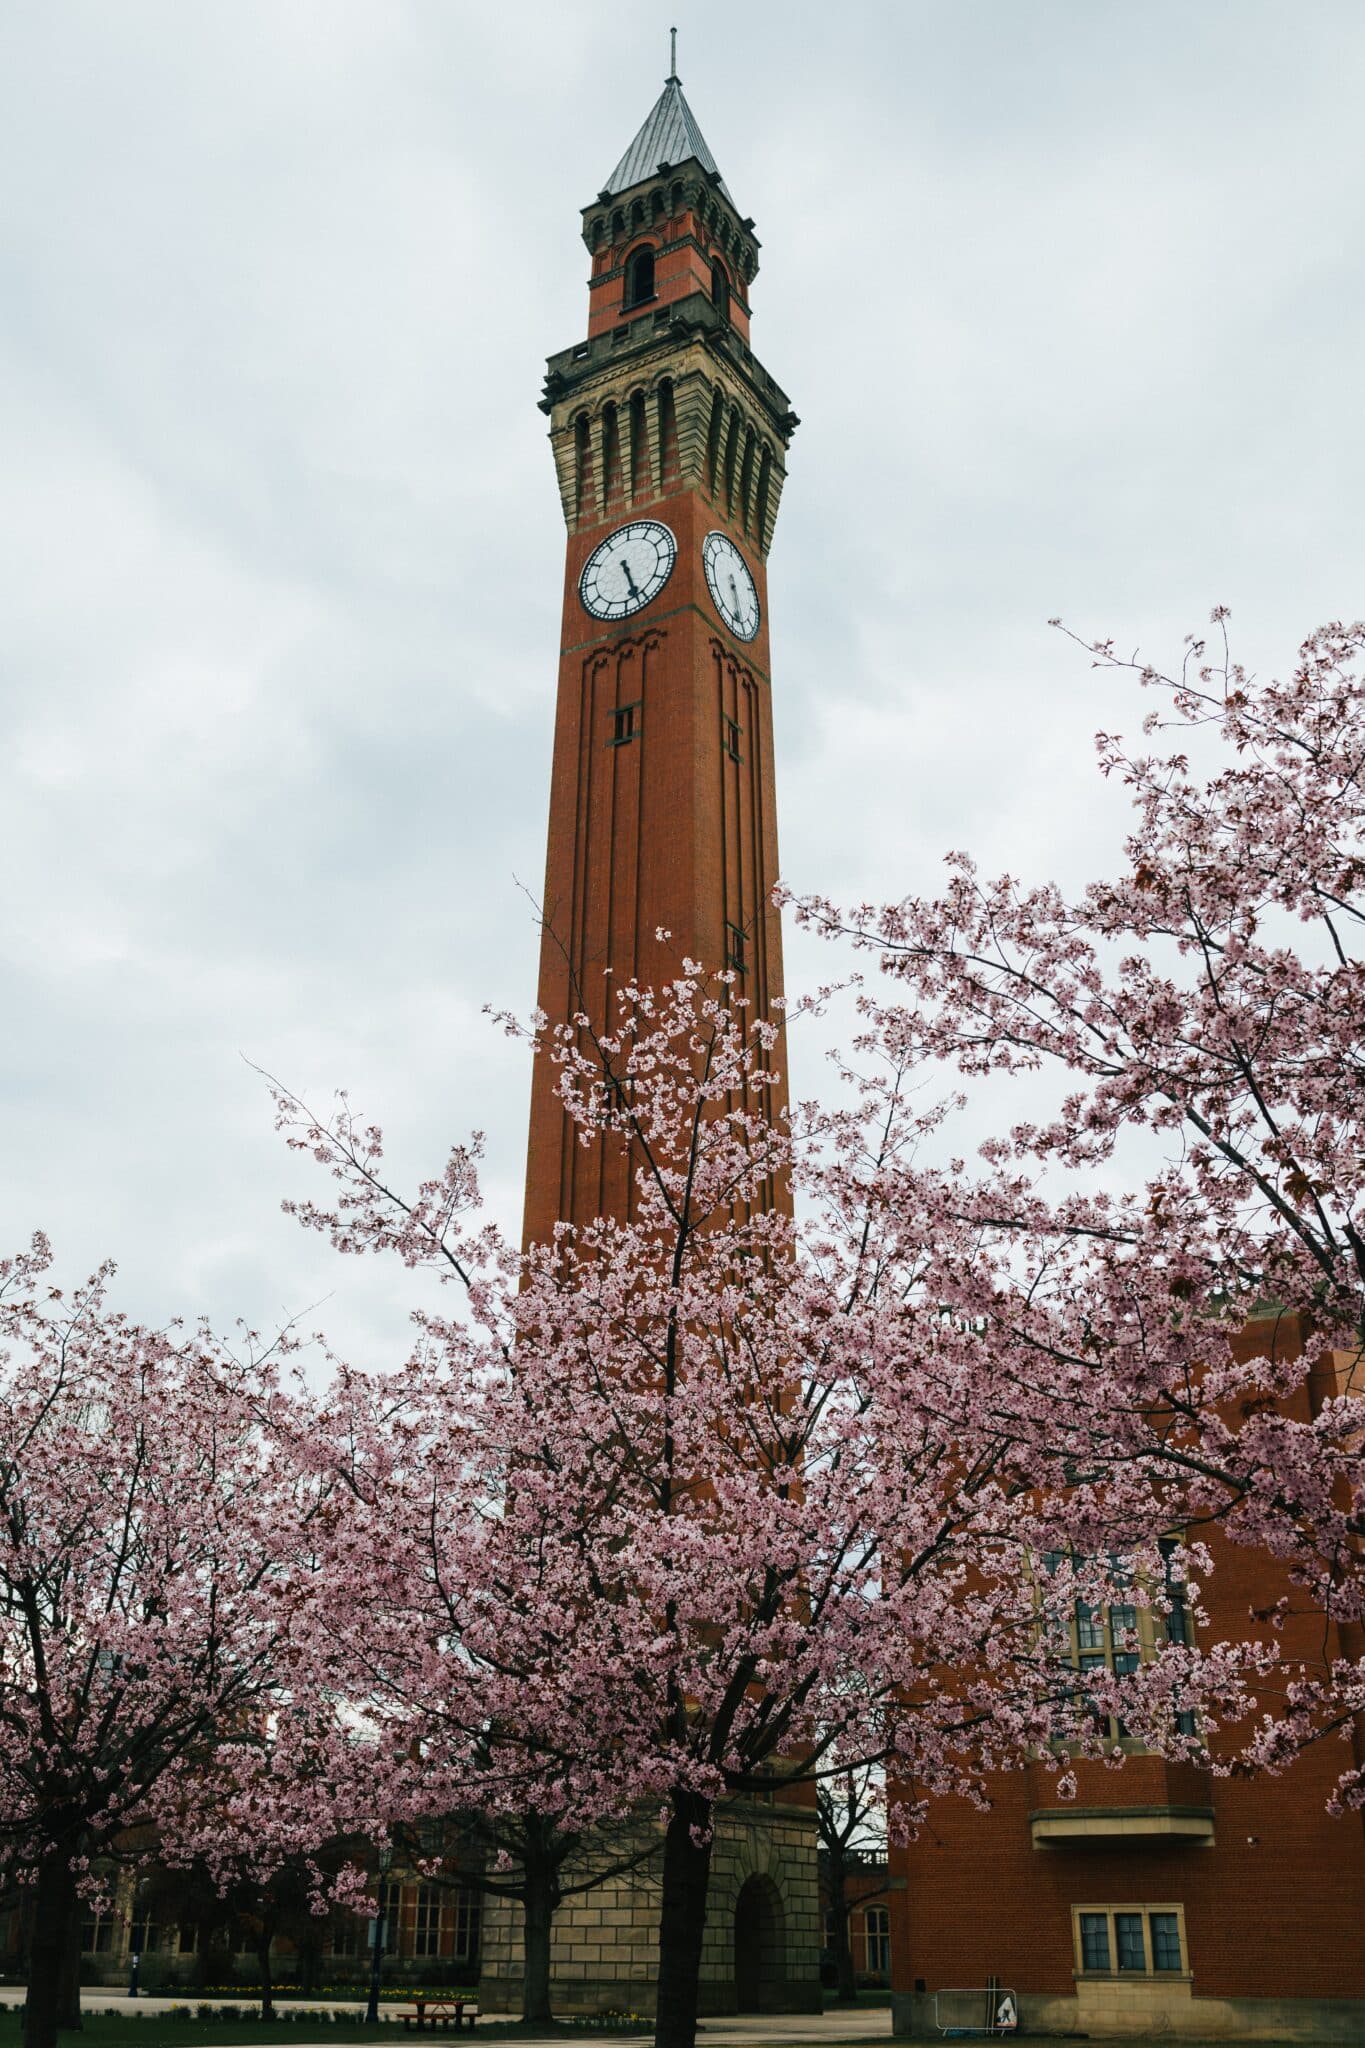 University of Birmingham clock tower - UoB homes a range of lecturer jobs in Birmingham